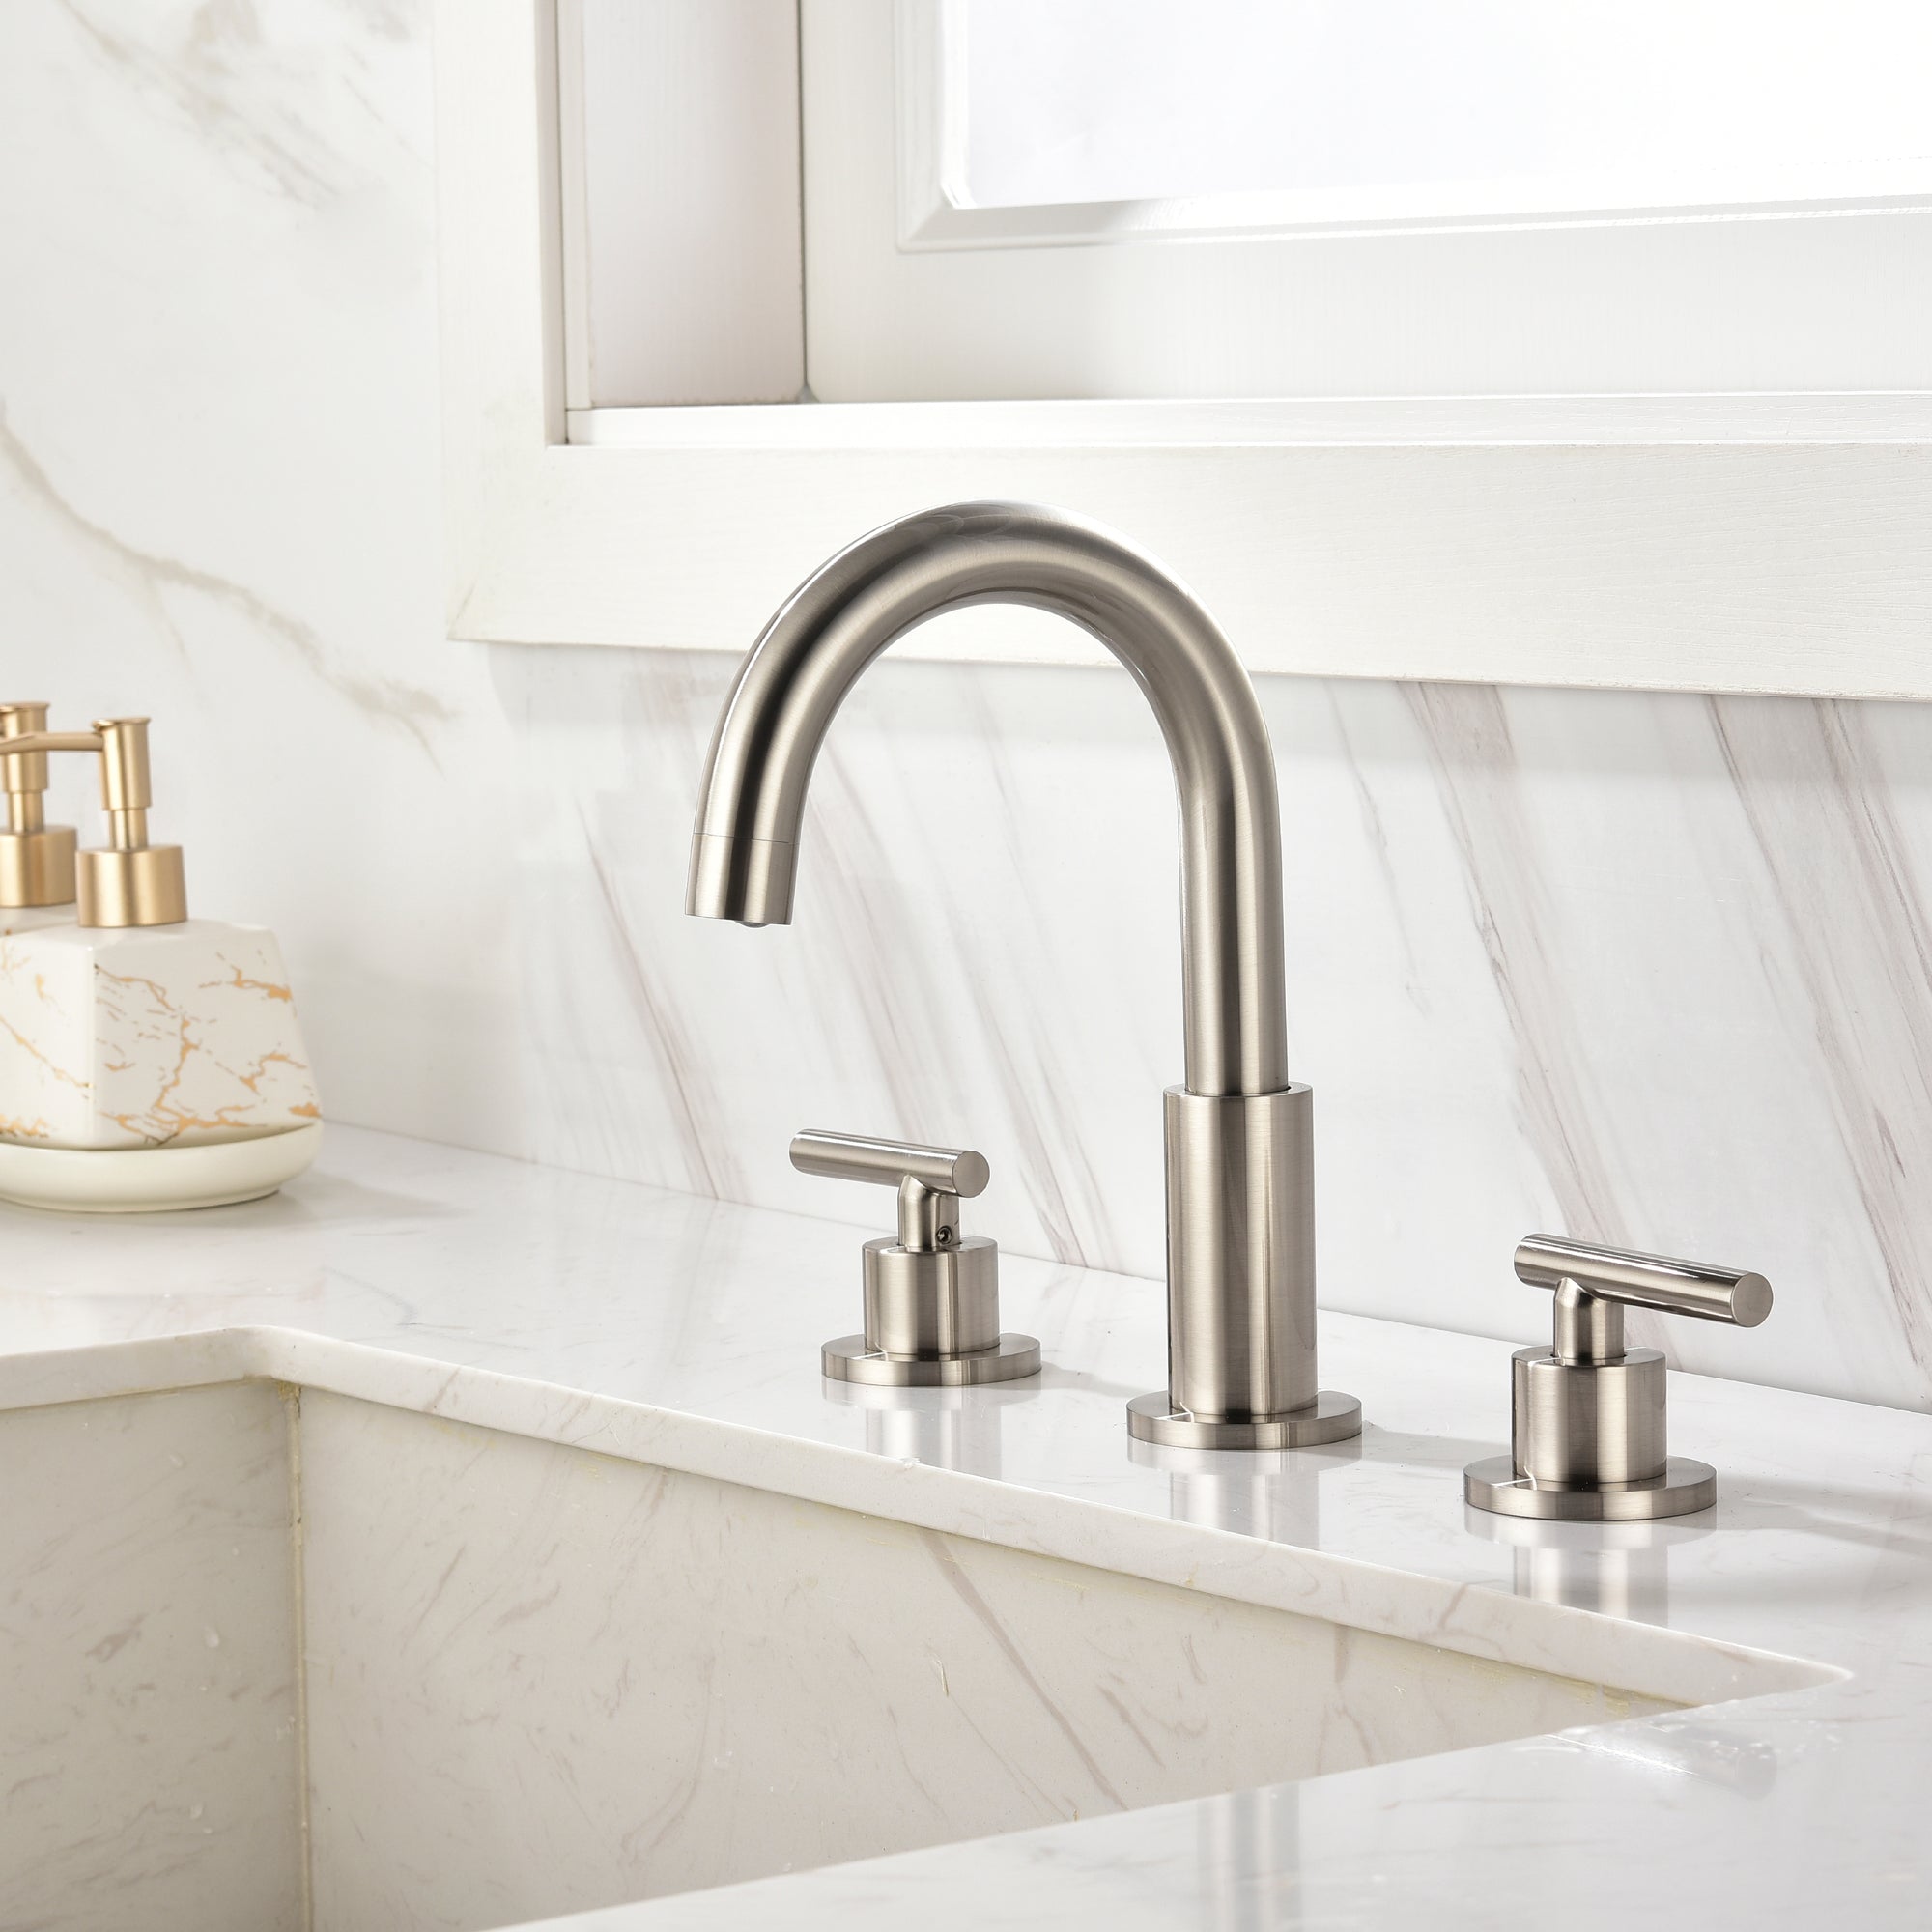 3 hole brass bathroom sink faucet, 2 handle 8 inch widespread